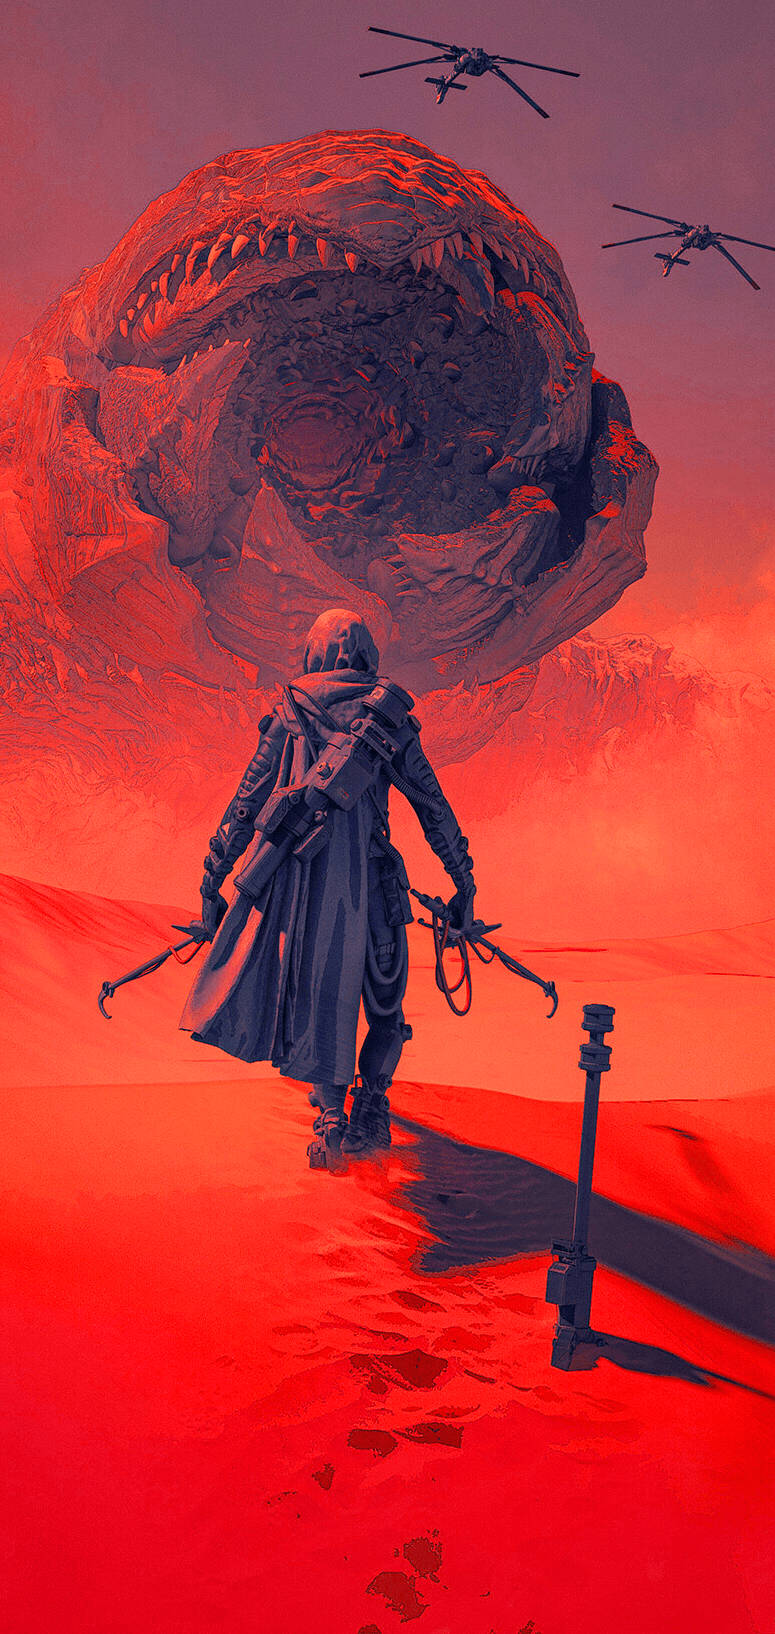 Dune 2021 Poster With Sandworm Wallpaper